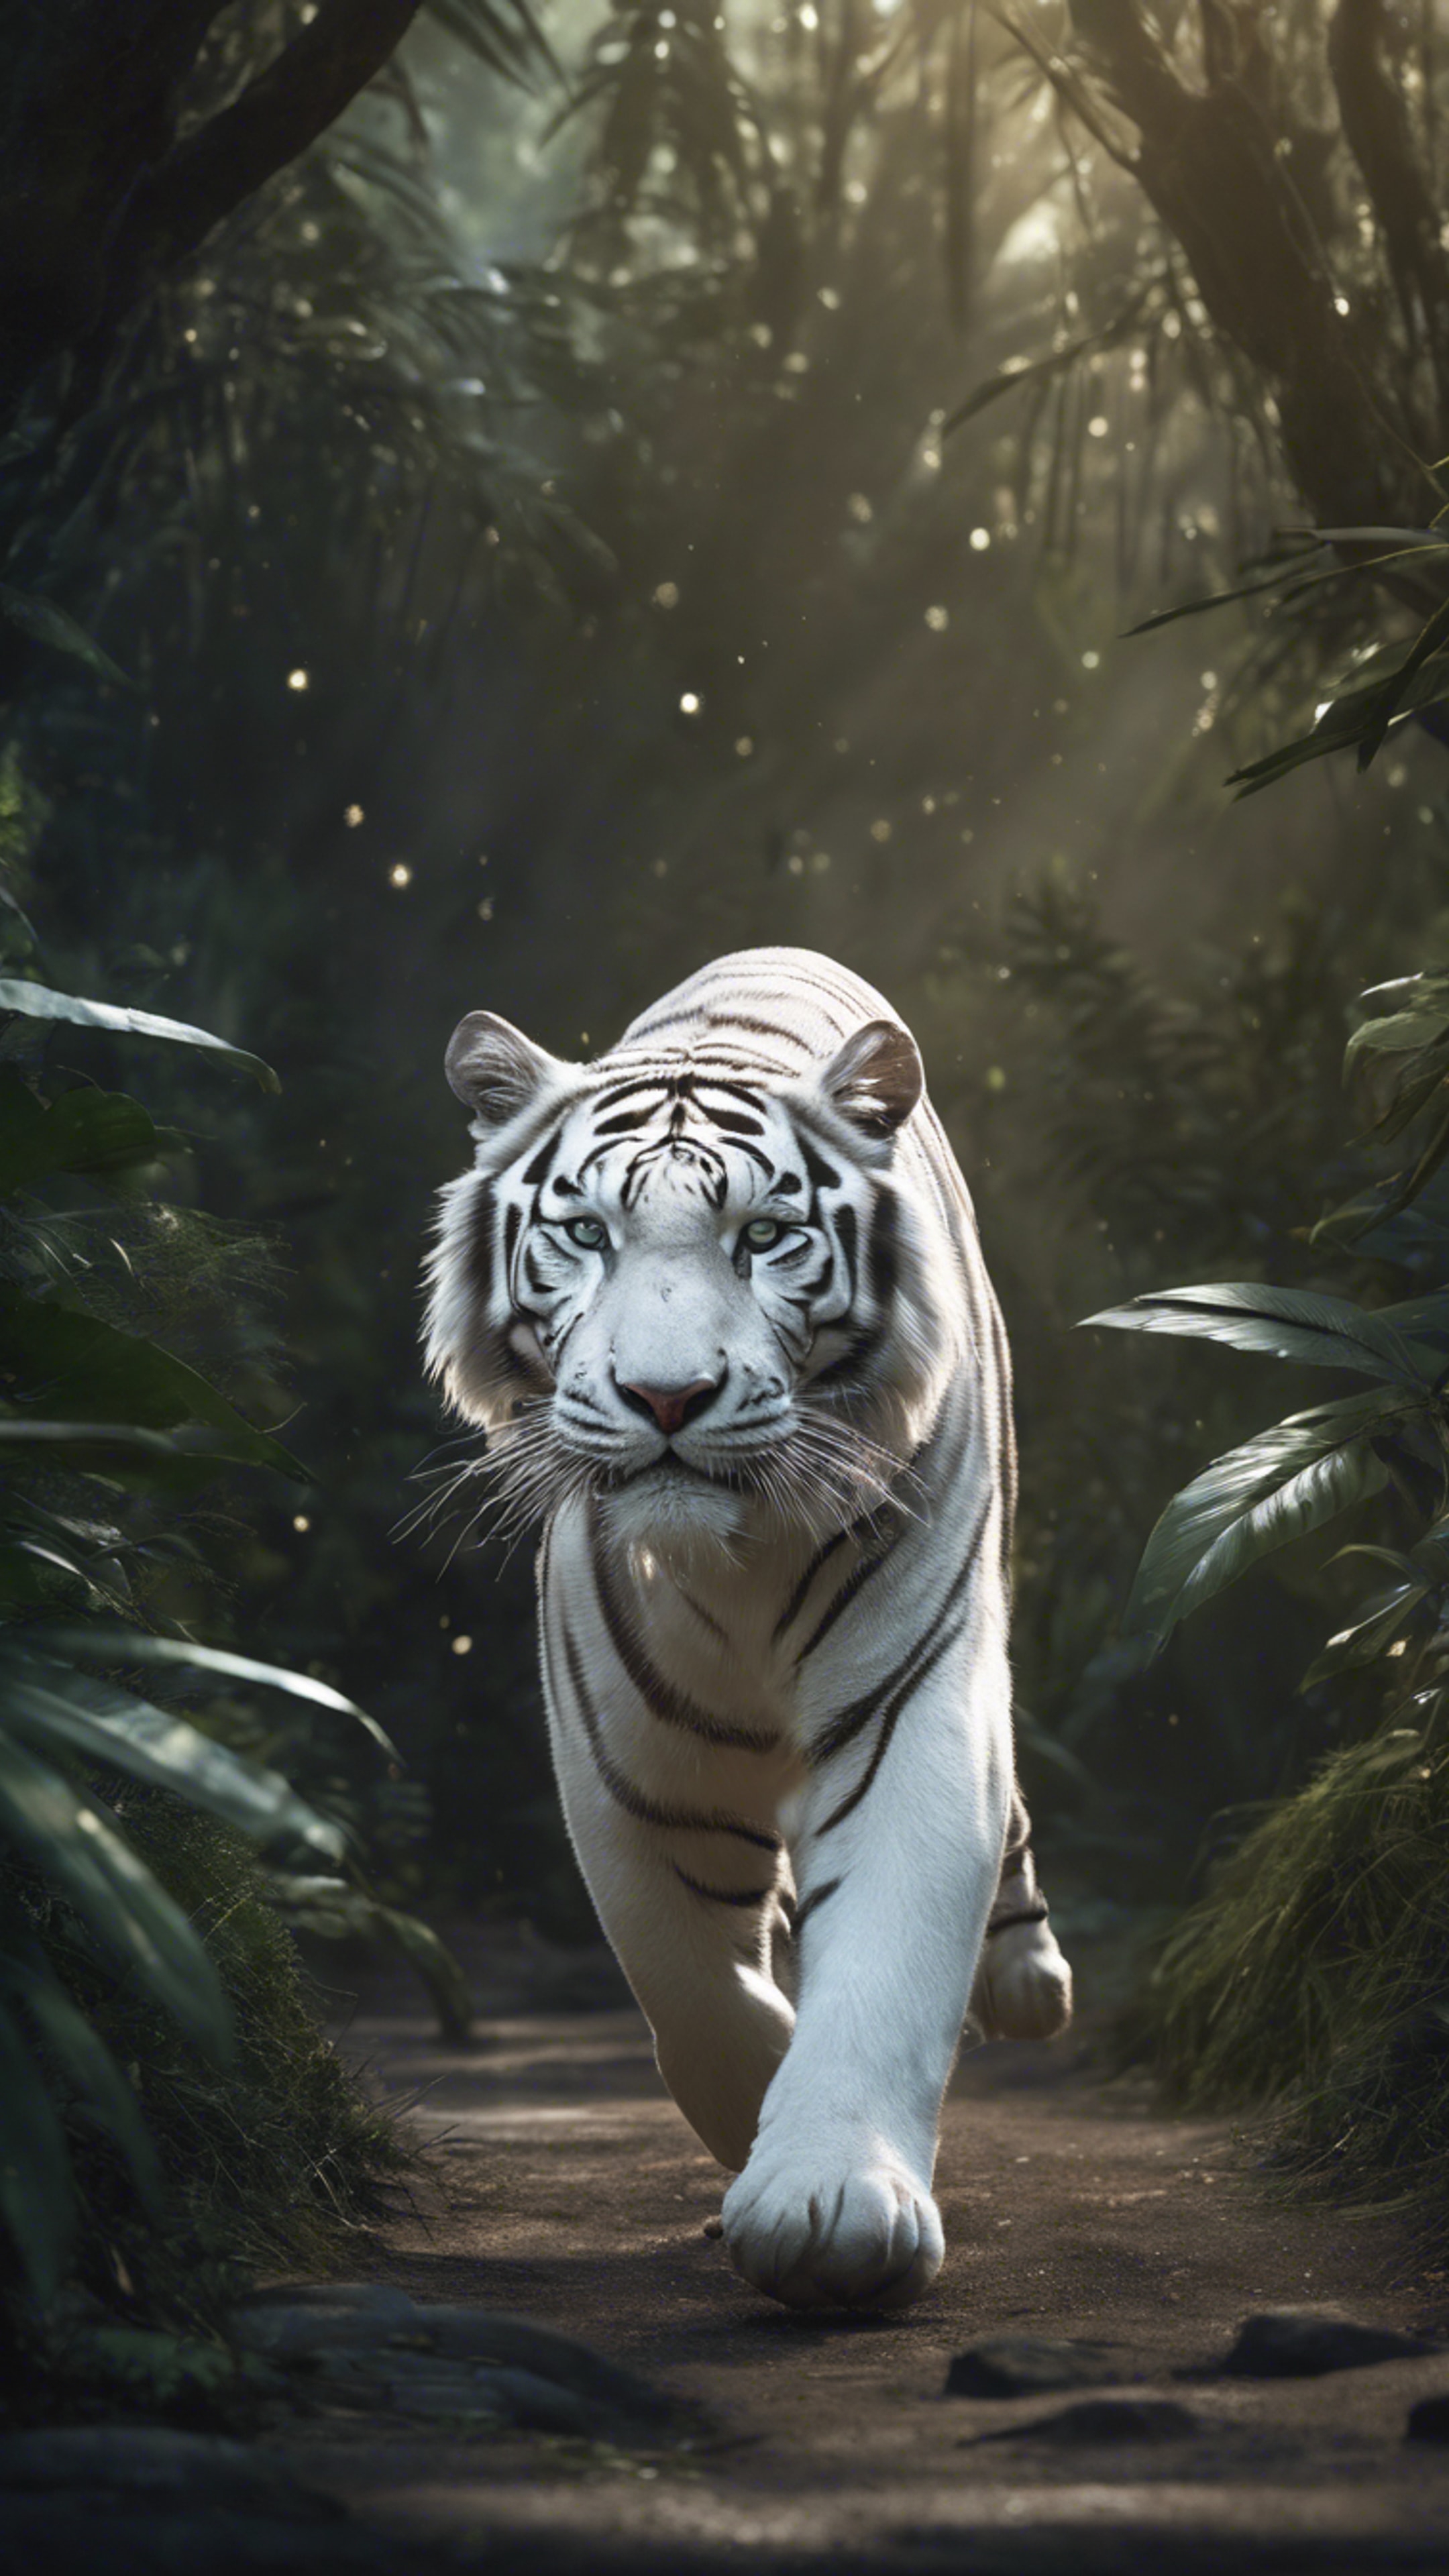 A cool white tiger, with silver stripes, strides powerfully through a moonlit jungle. ផ្ទាំង​រូបភាព[5d9925a4be334da199e0]